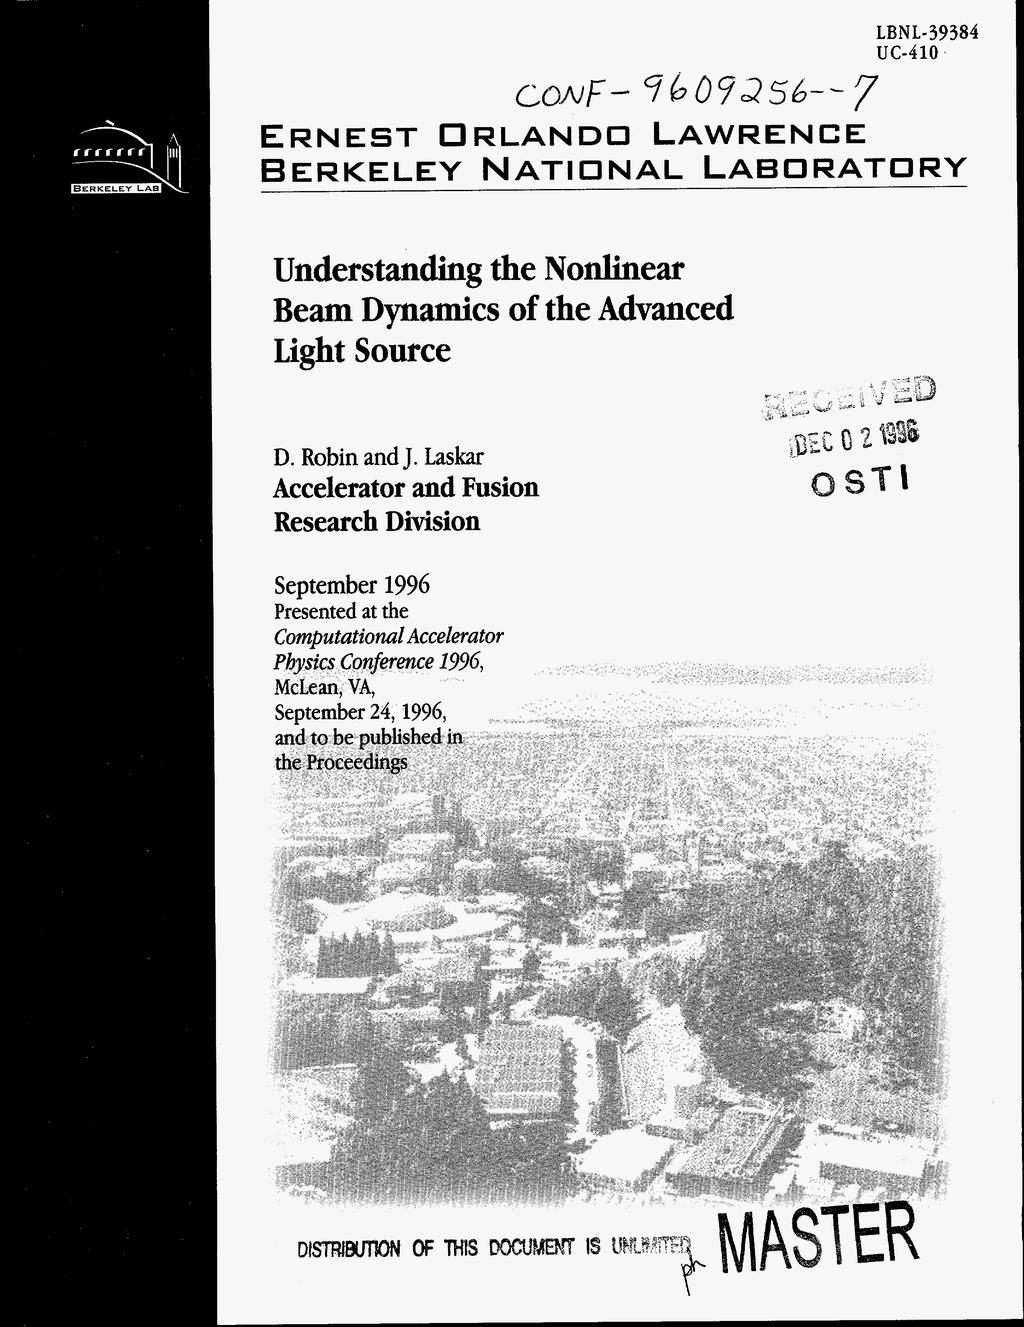 LBNL-39384 UC-410 ERNESTORLANDO LAWRENCE BERKELEY NATIONAL LABORATORY Understanding the Nonlinear Beam Dynamics of the Advanced